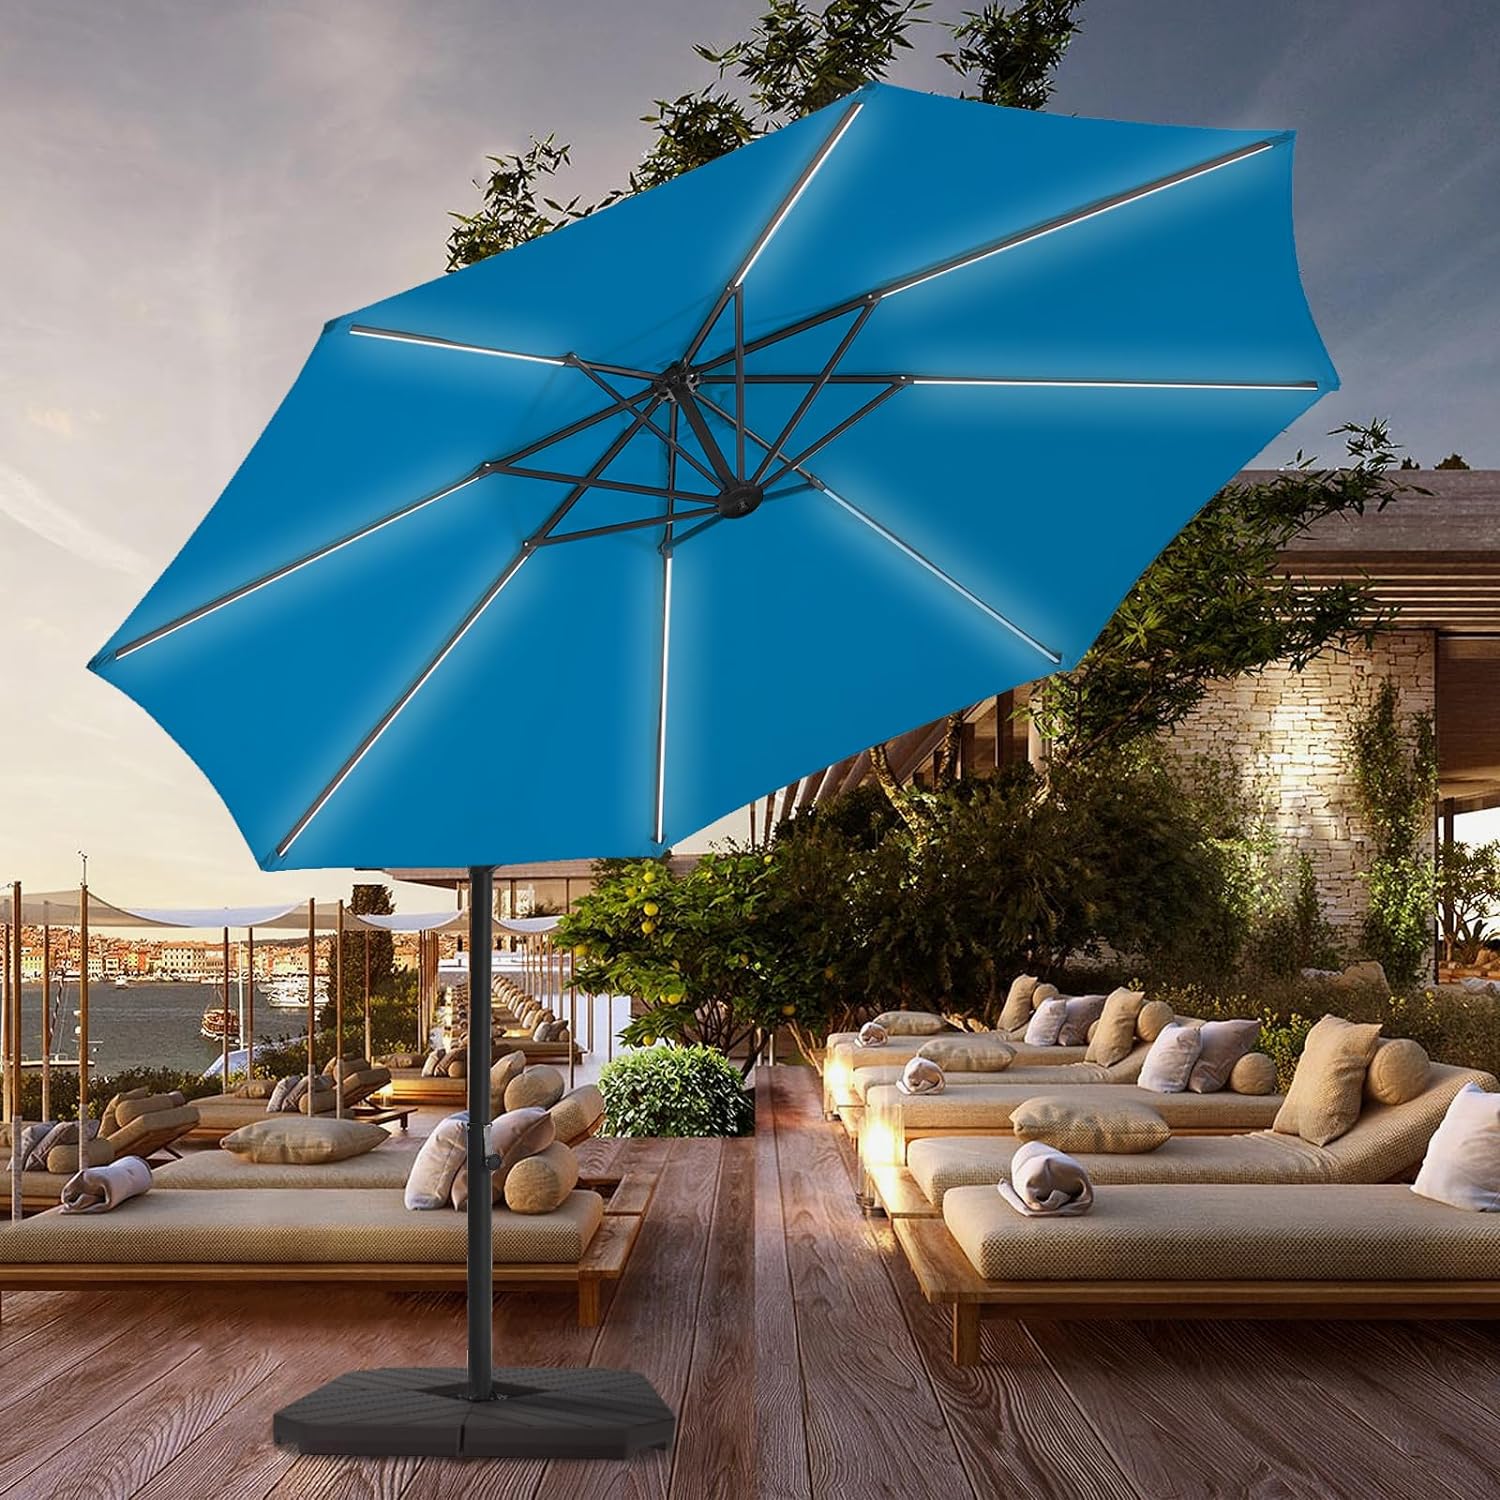 BLUU 10 FT Patio Offset Umbrella Outdoor Cantilever Umbrella Hanging Umbrellas, Fade Resistant Crank & Cross Base (Royal Blue, 10 FT WITH LIGHTS&COVER)